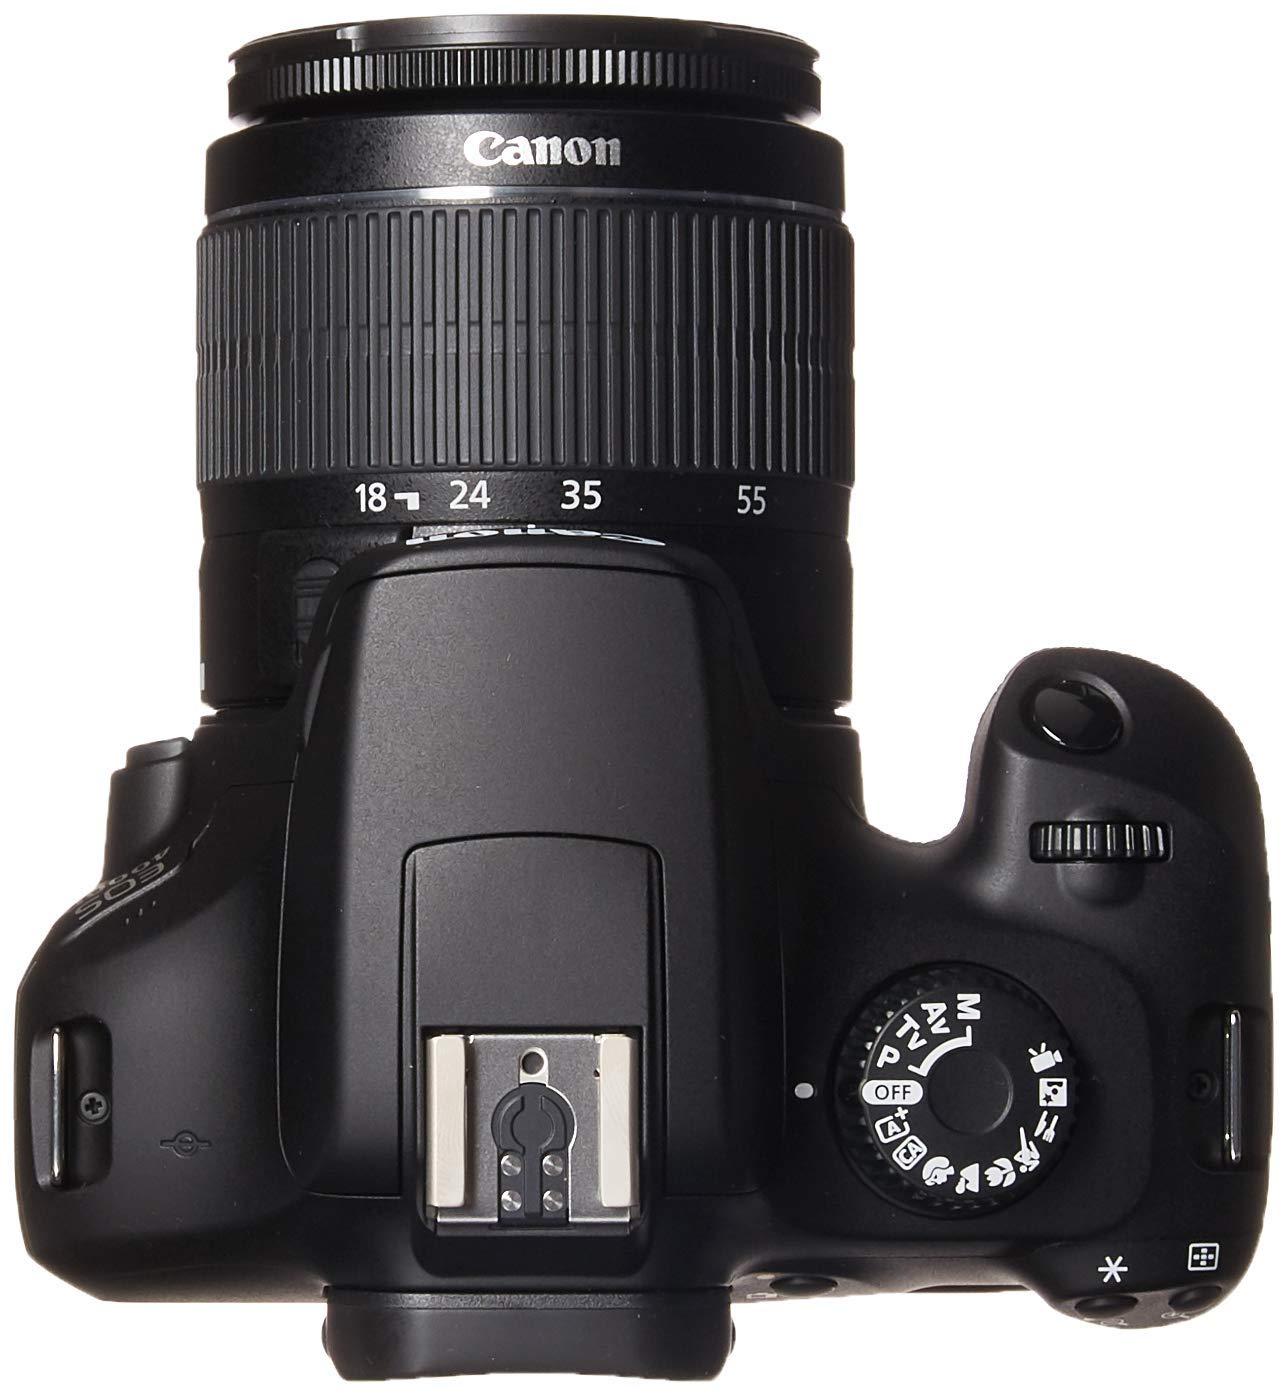 Canon EOS 4000D DSLR Camera EF-S 18-55 mm f/3.5-5.6 III Lens